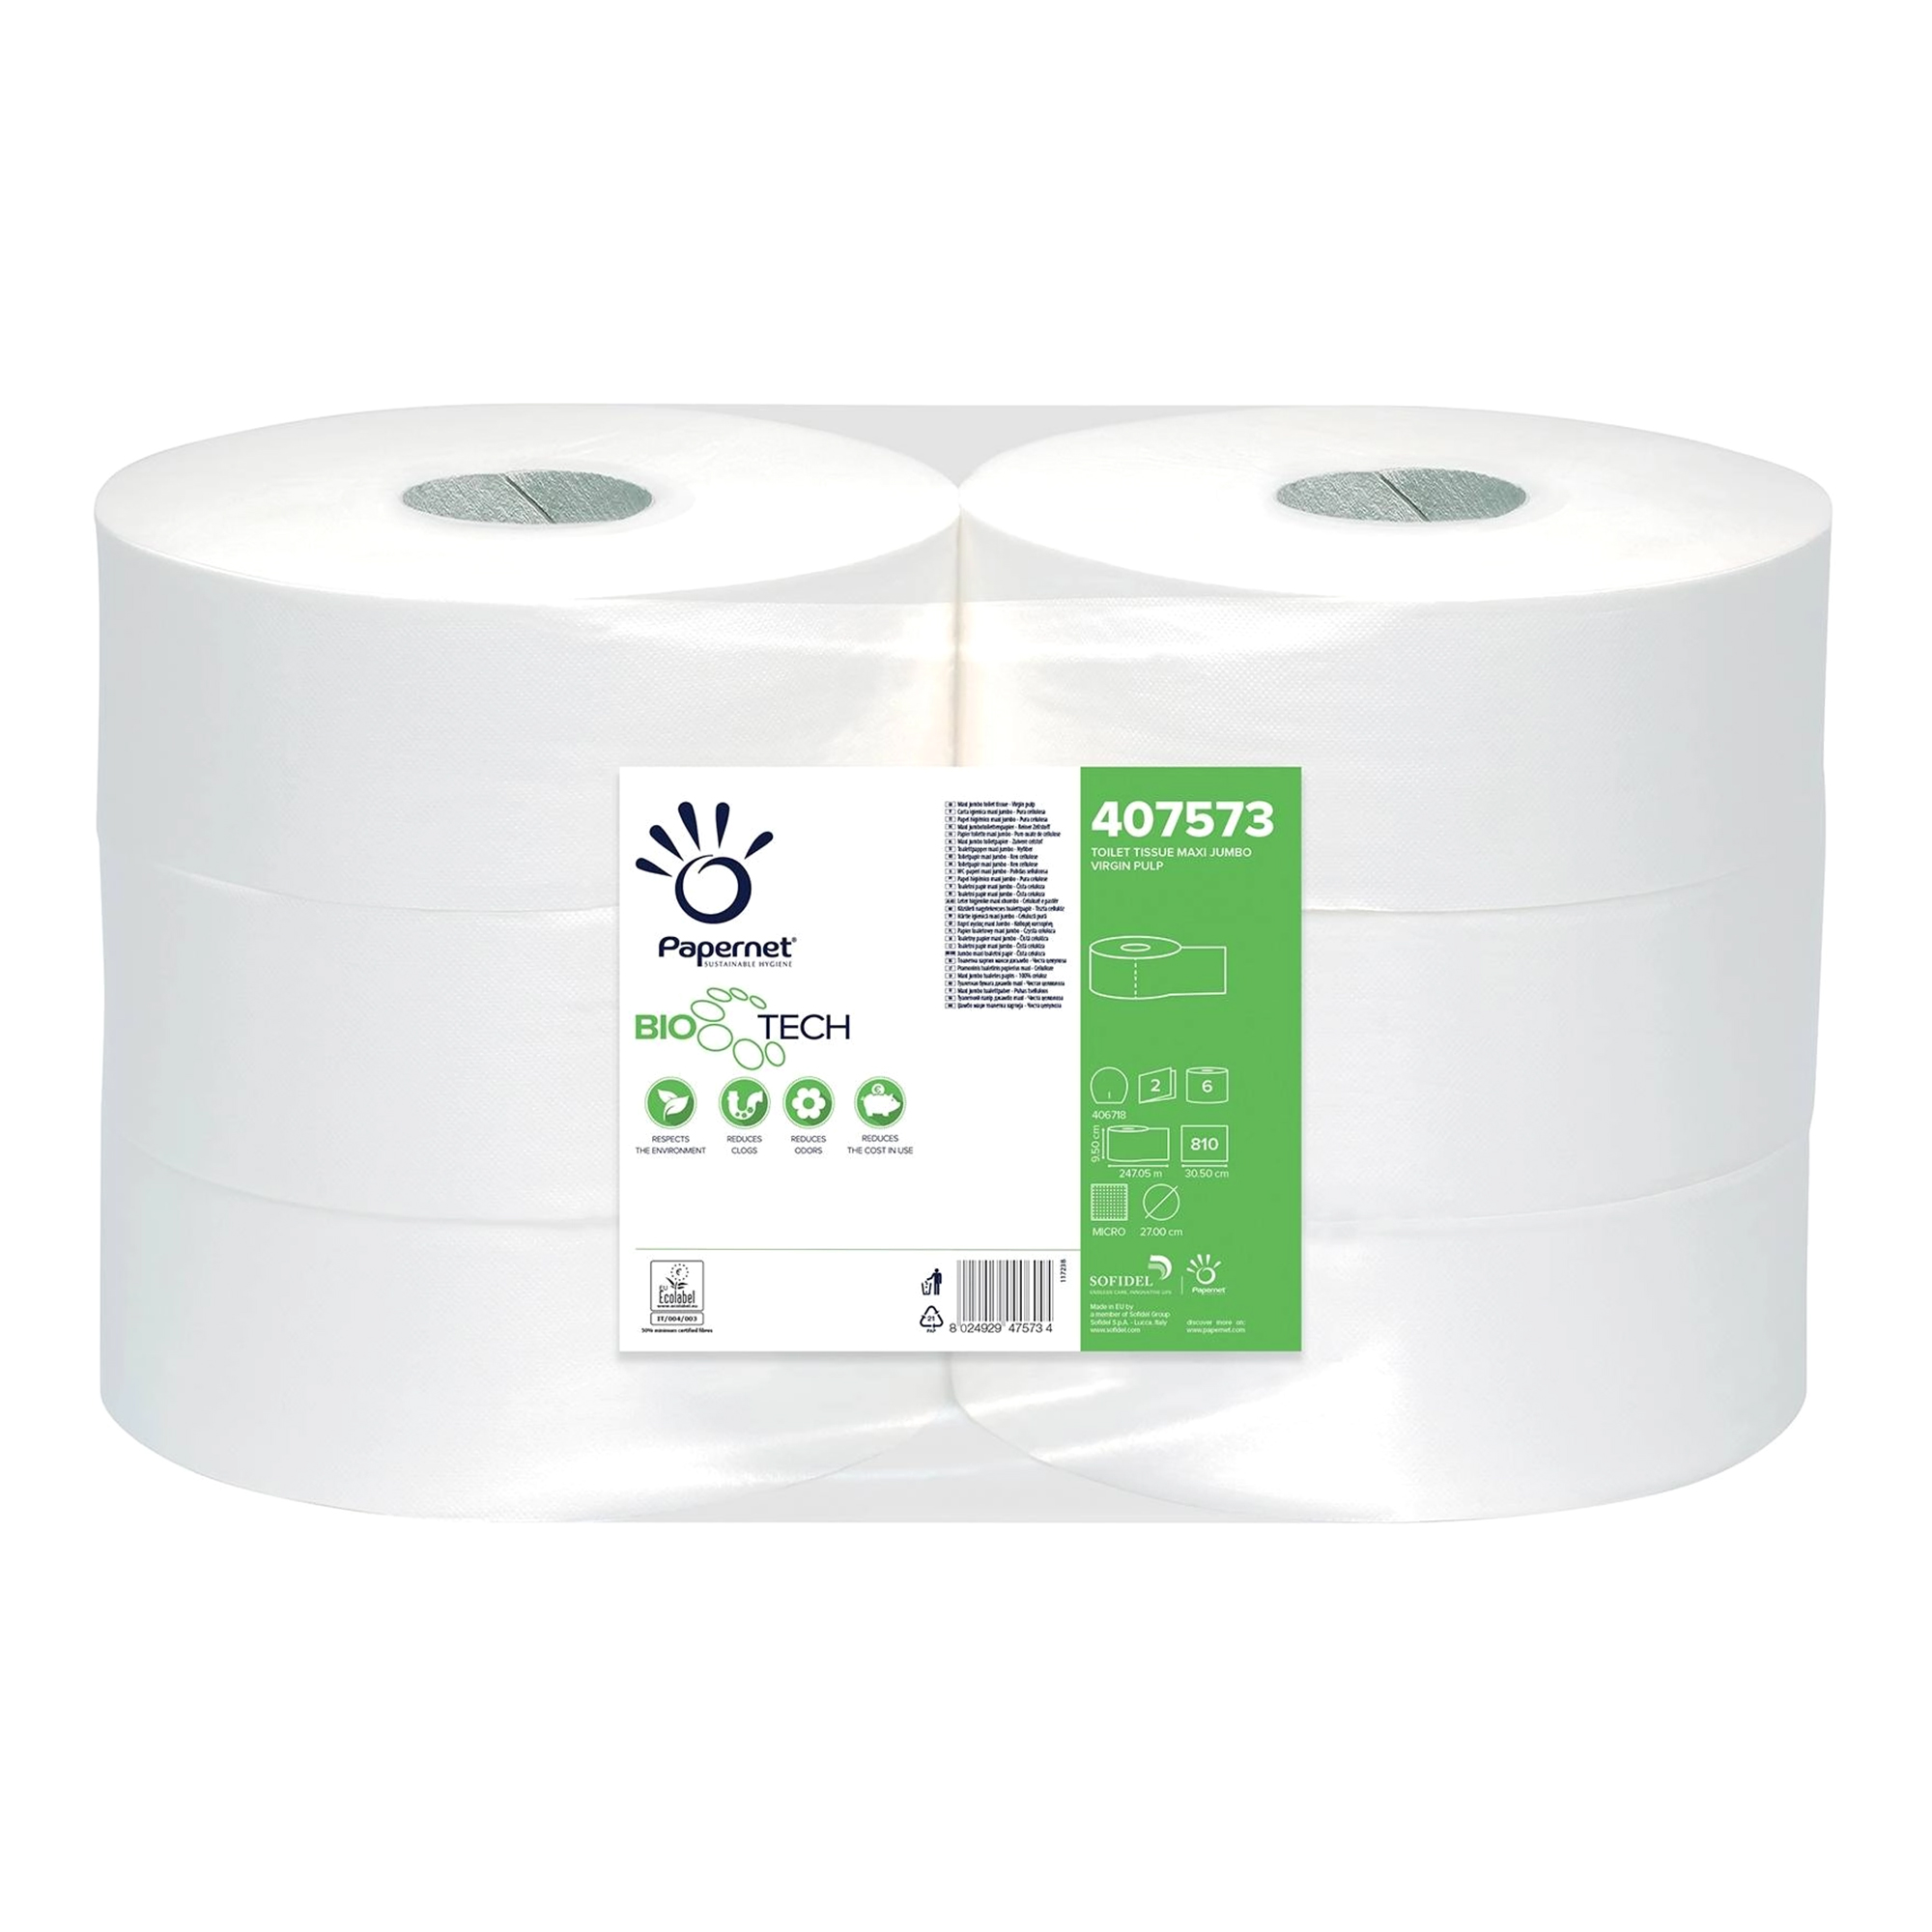 Papernet Toilettenpapier Bio Tech Maxi Jumborolle weiß 2-lagig, 247 Meter